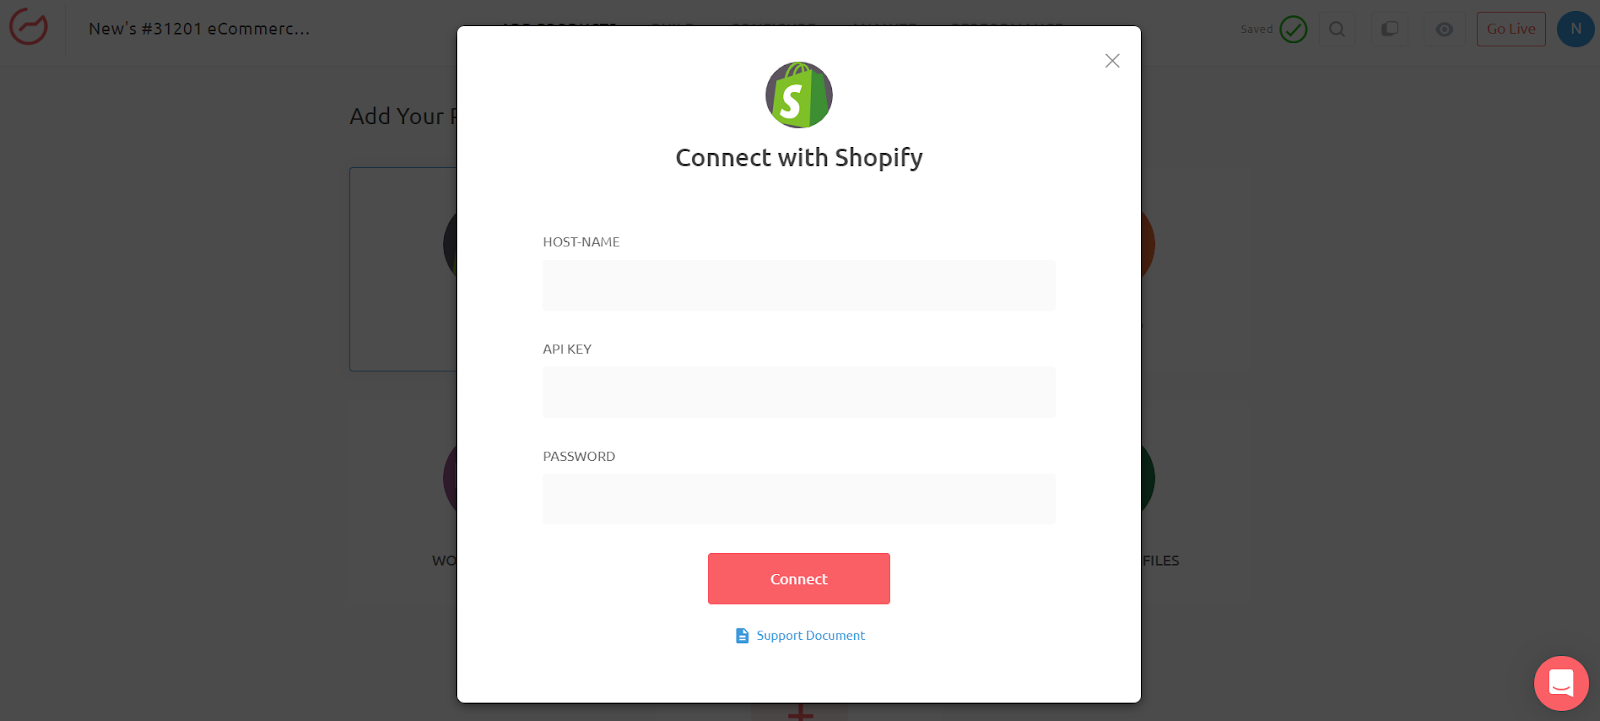 Outgrow's shopify integration